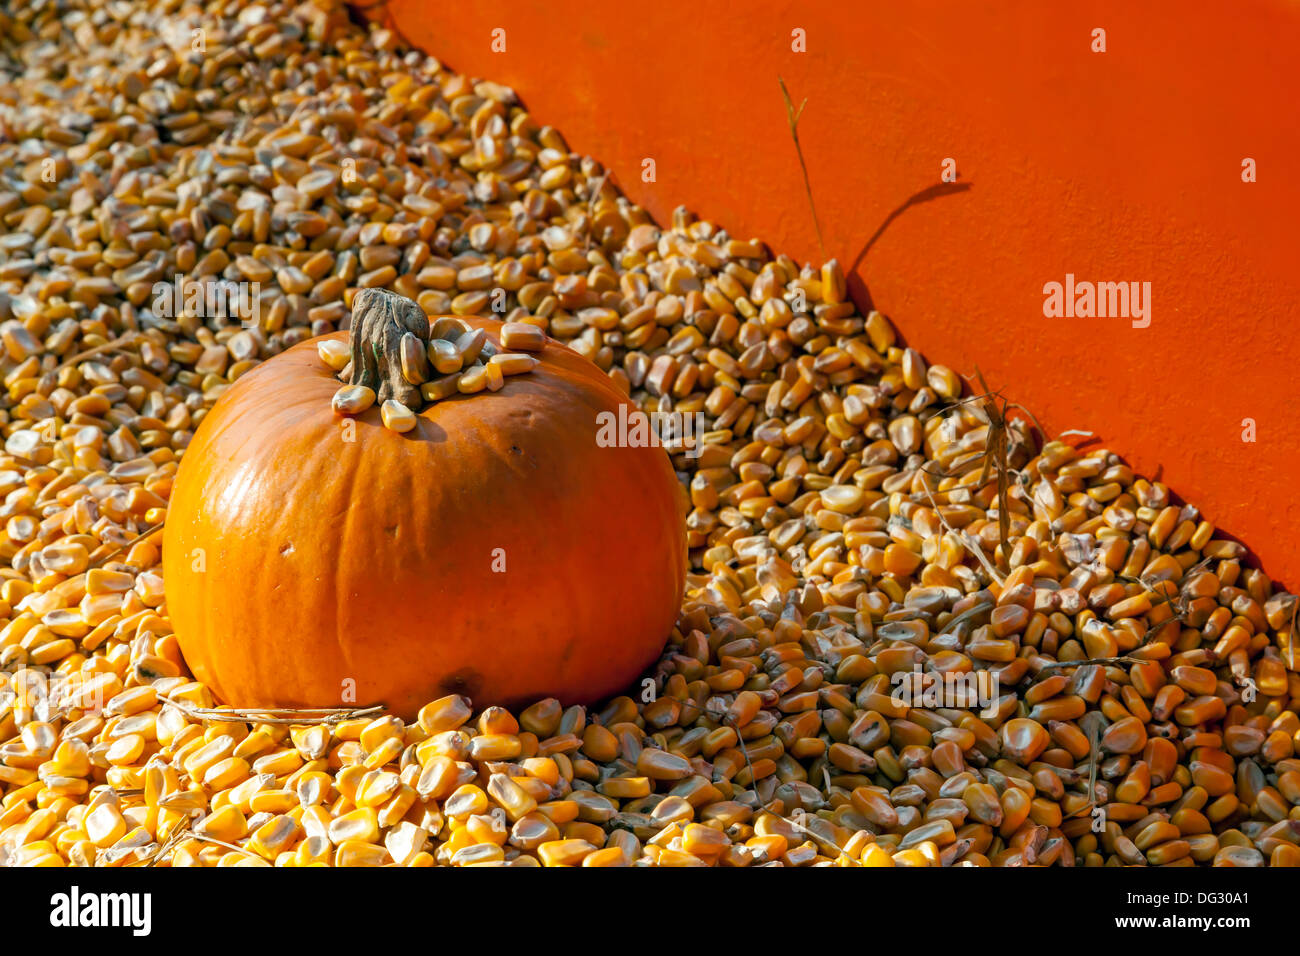 Small orange Halloween pumpkin [Cucurbita pepo] nestled in a pile of yellow kernels of corn. Stock Photo